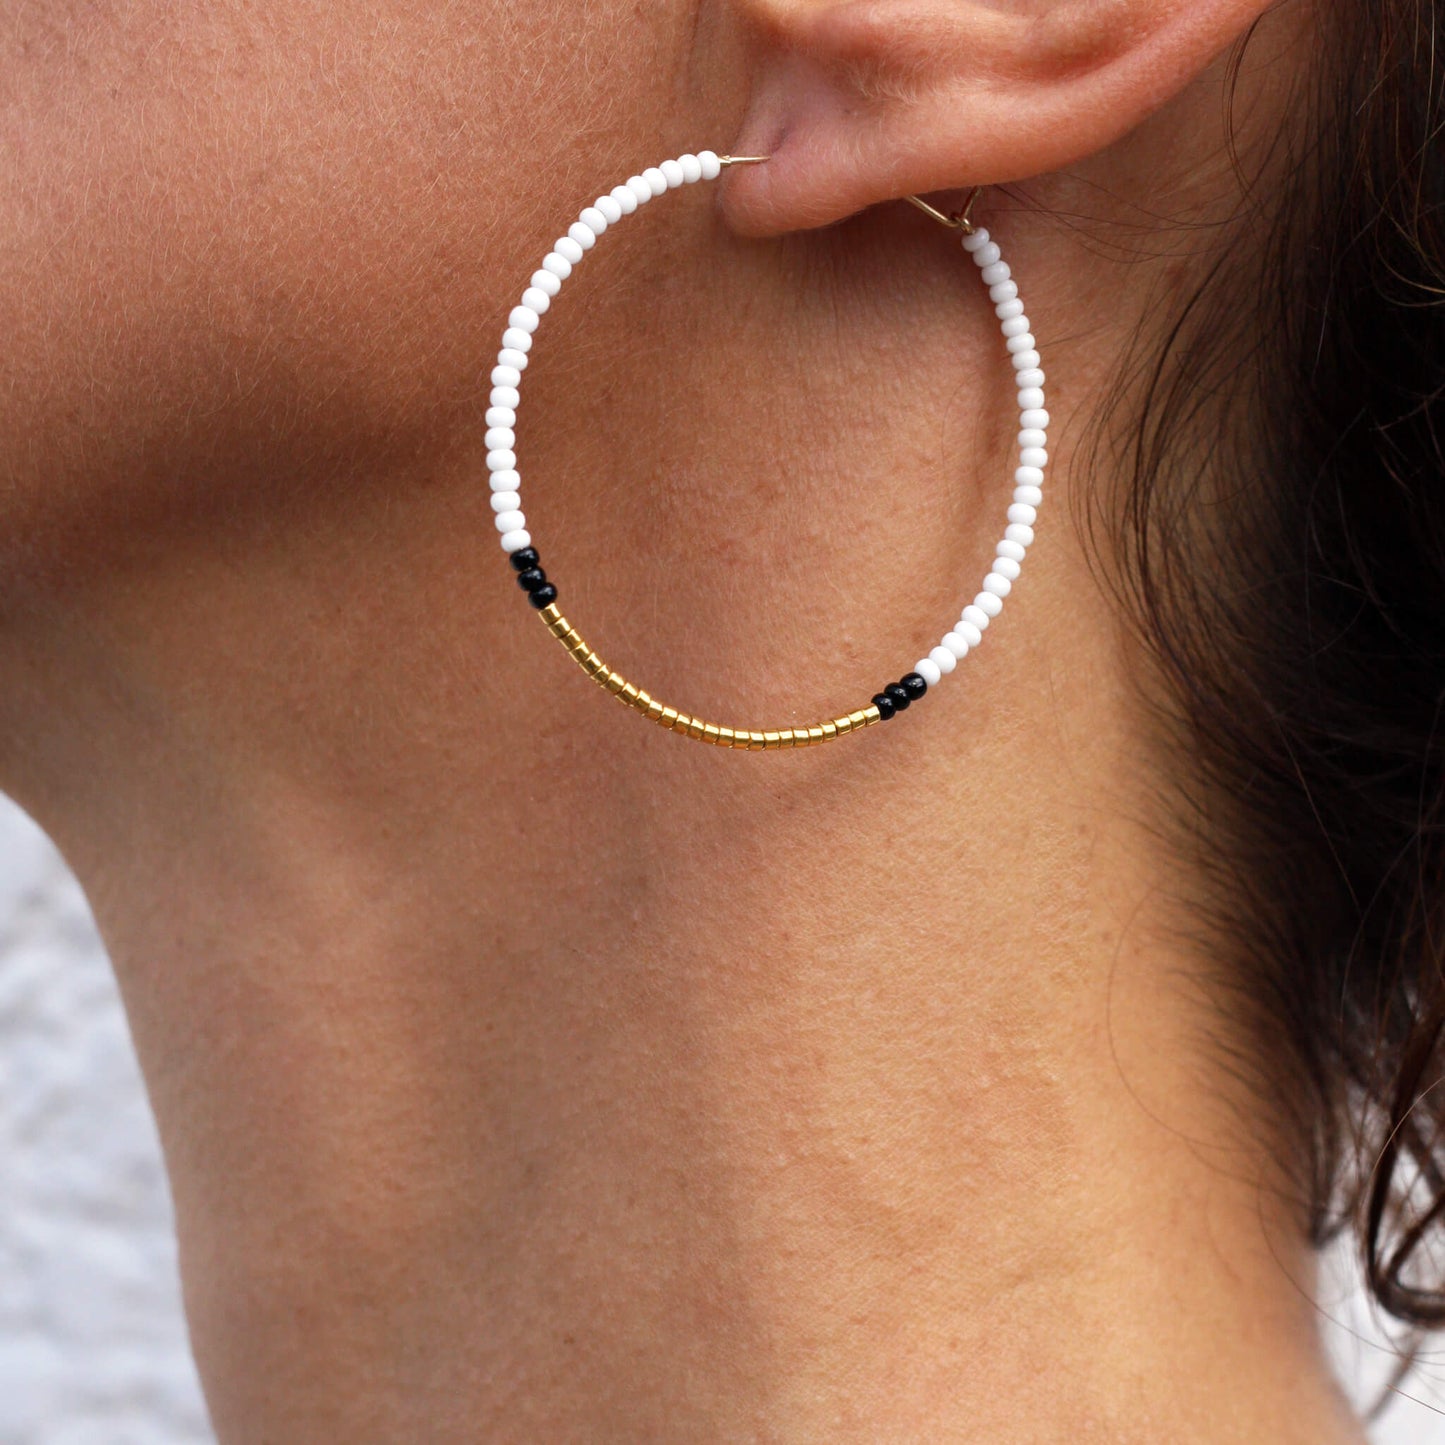 Endito Large Hoop Earrings Handmade White, Gold & Black - Unik by Nature